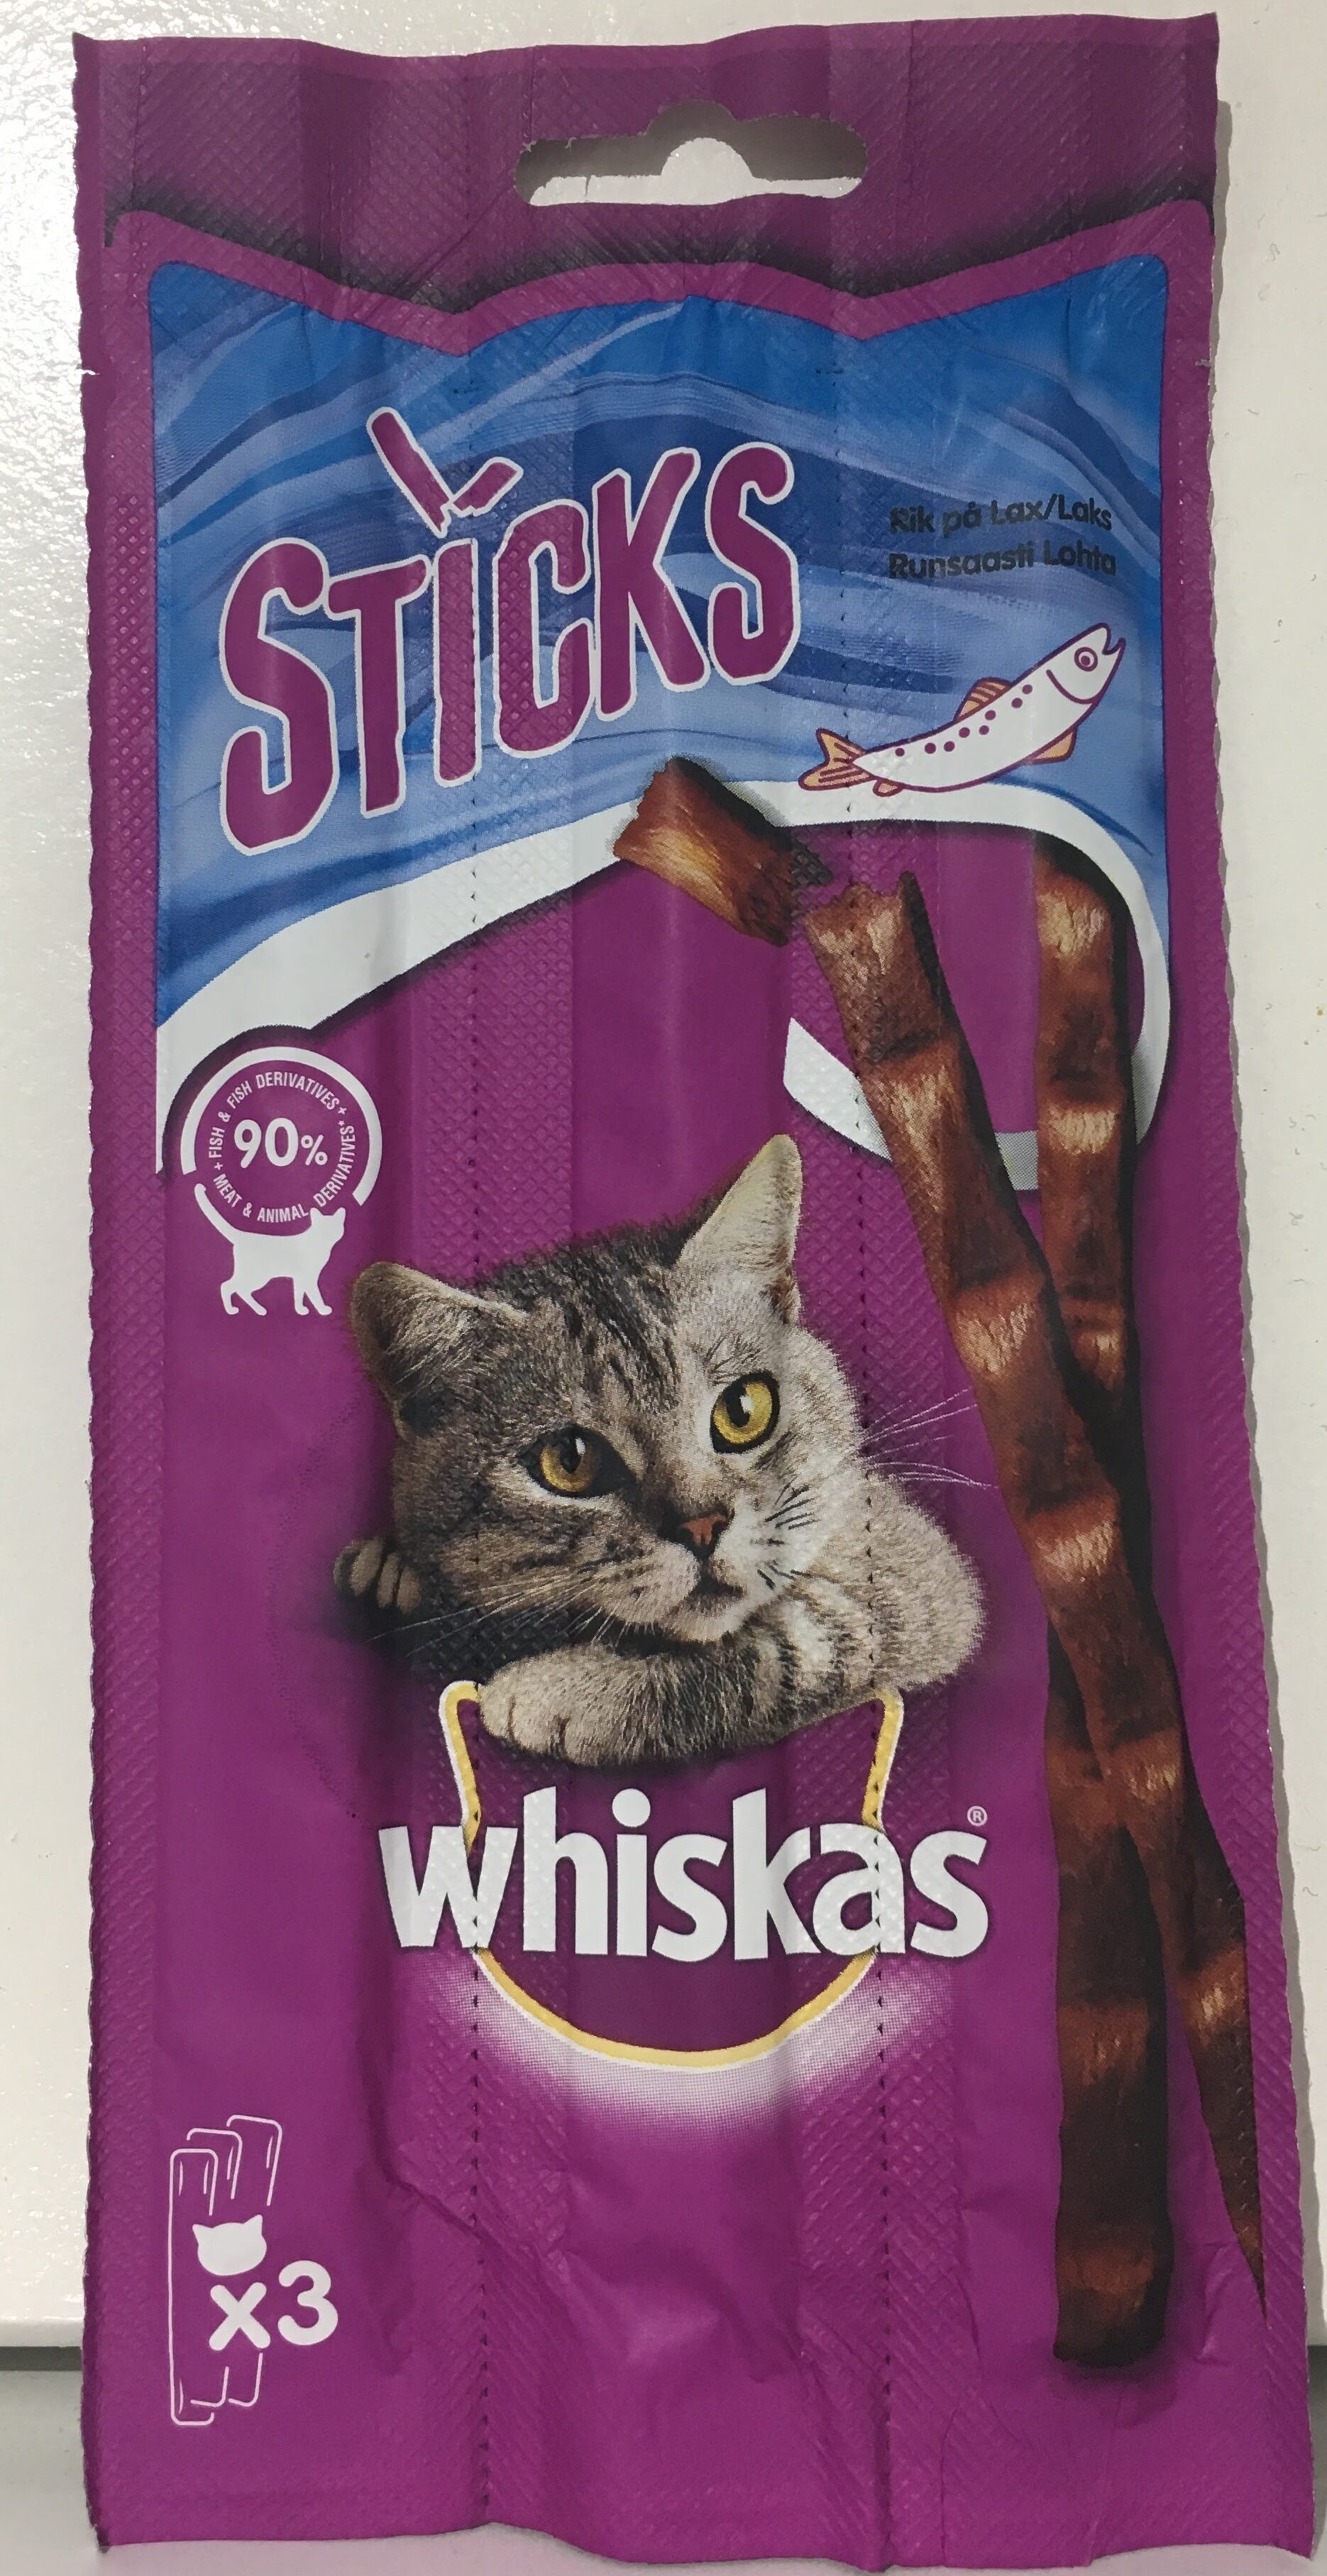 Whiskas Au Saumon 3 Sticks - Product - fr